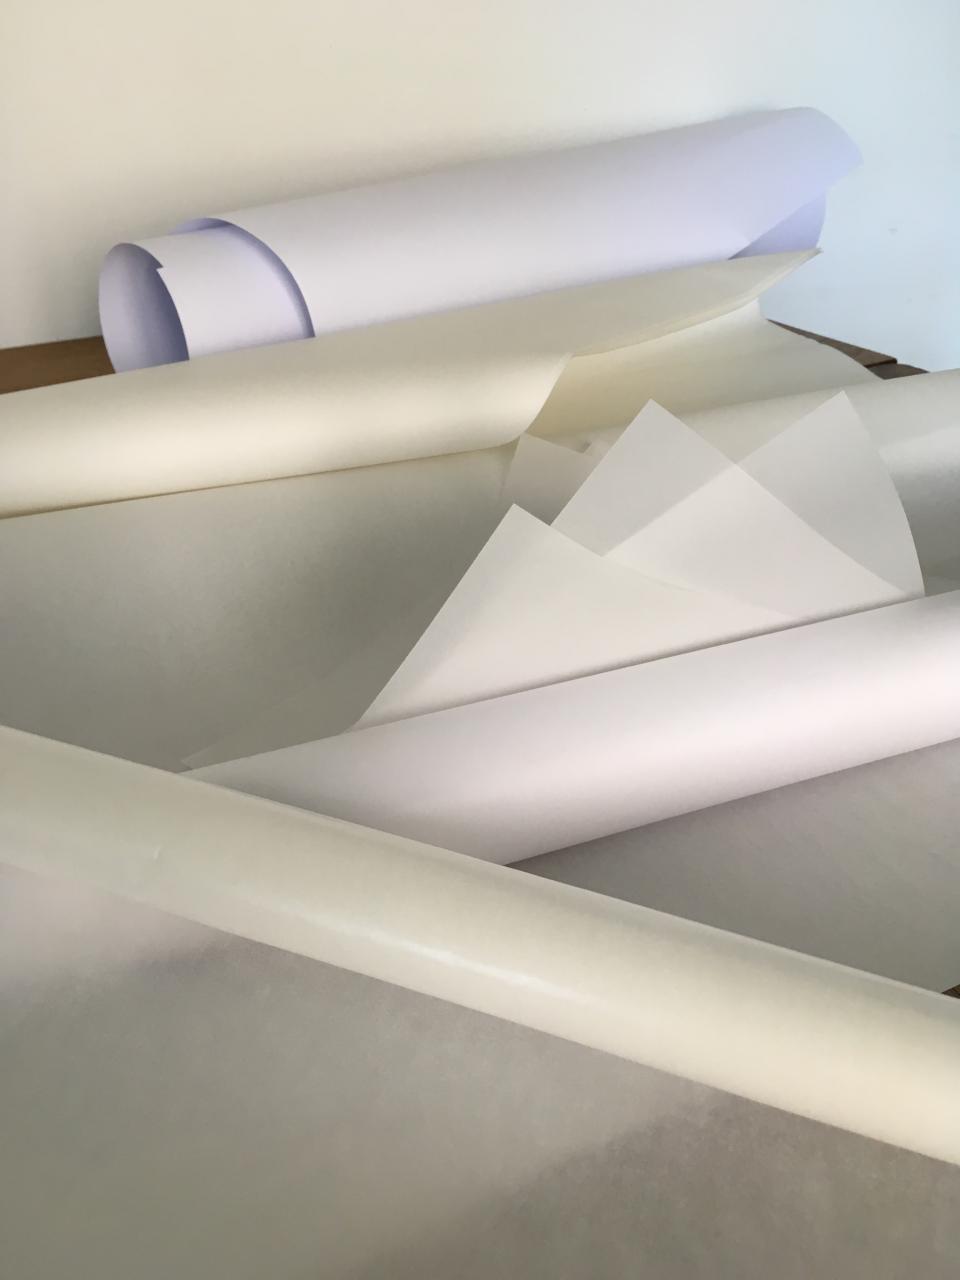 more folds paper rolls